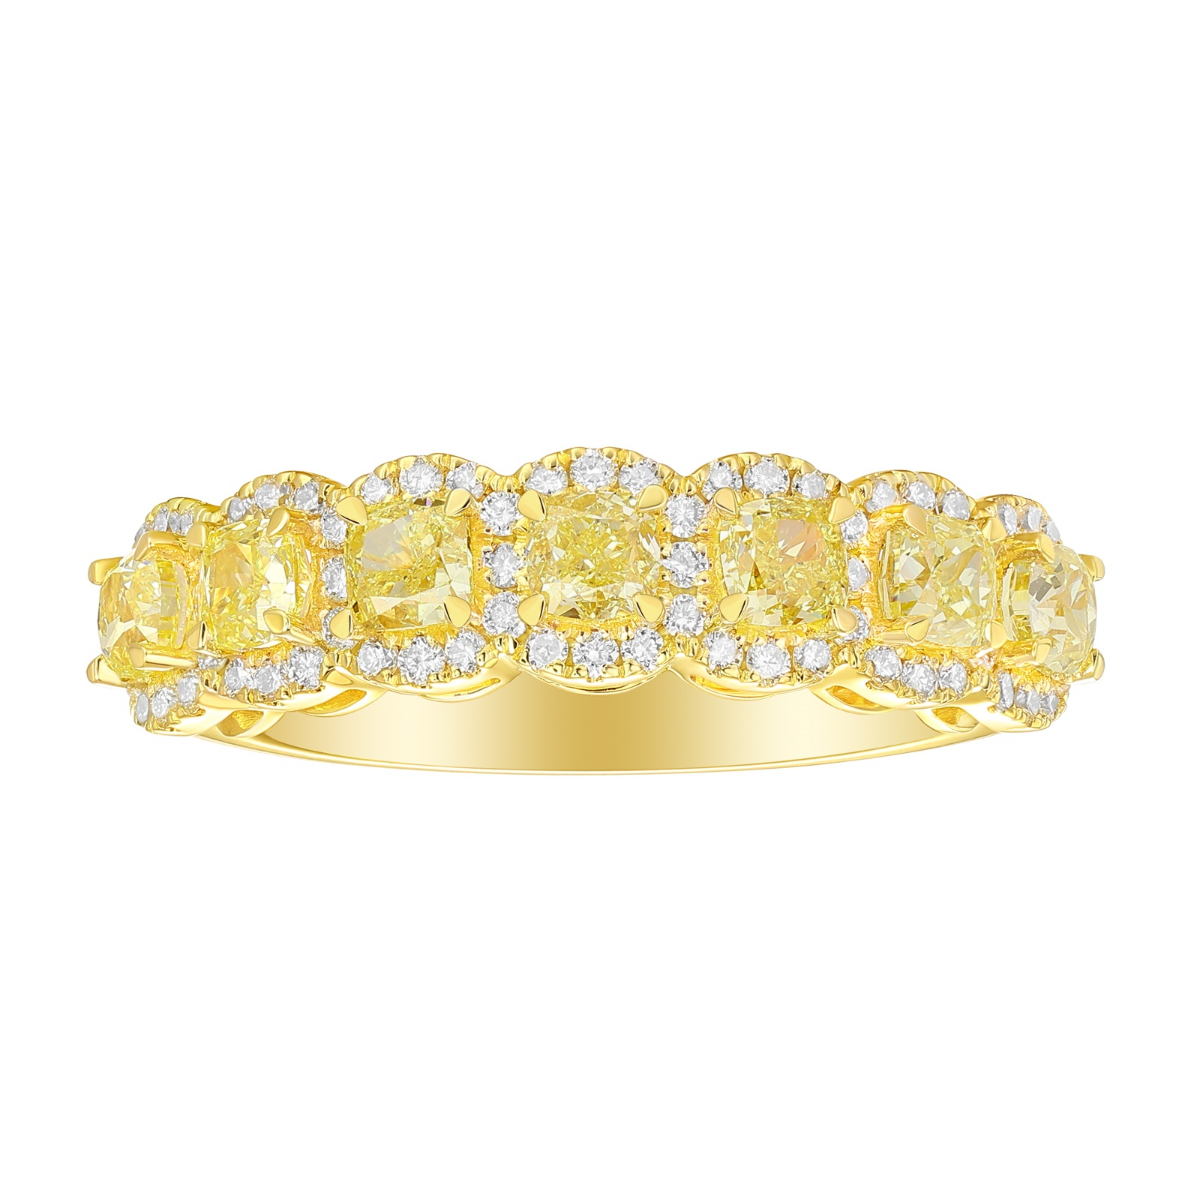 R37133NYL – 18K Yellow Gold Diamond Ring, 1.46 TCW